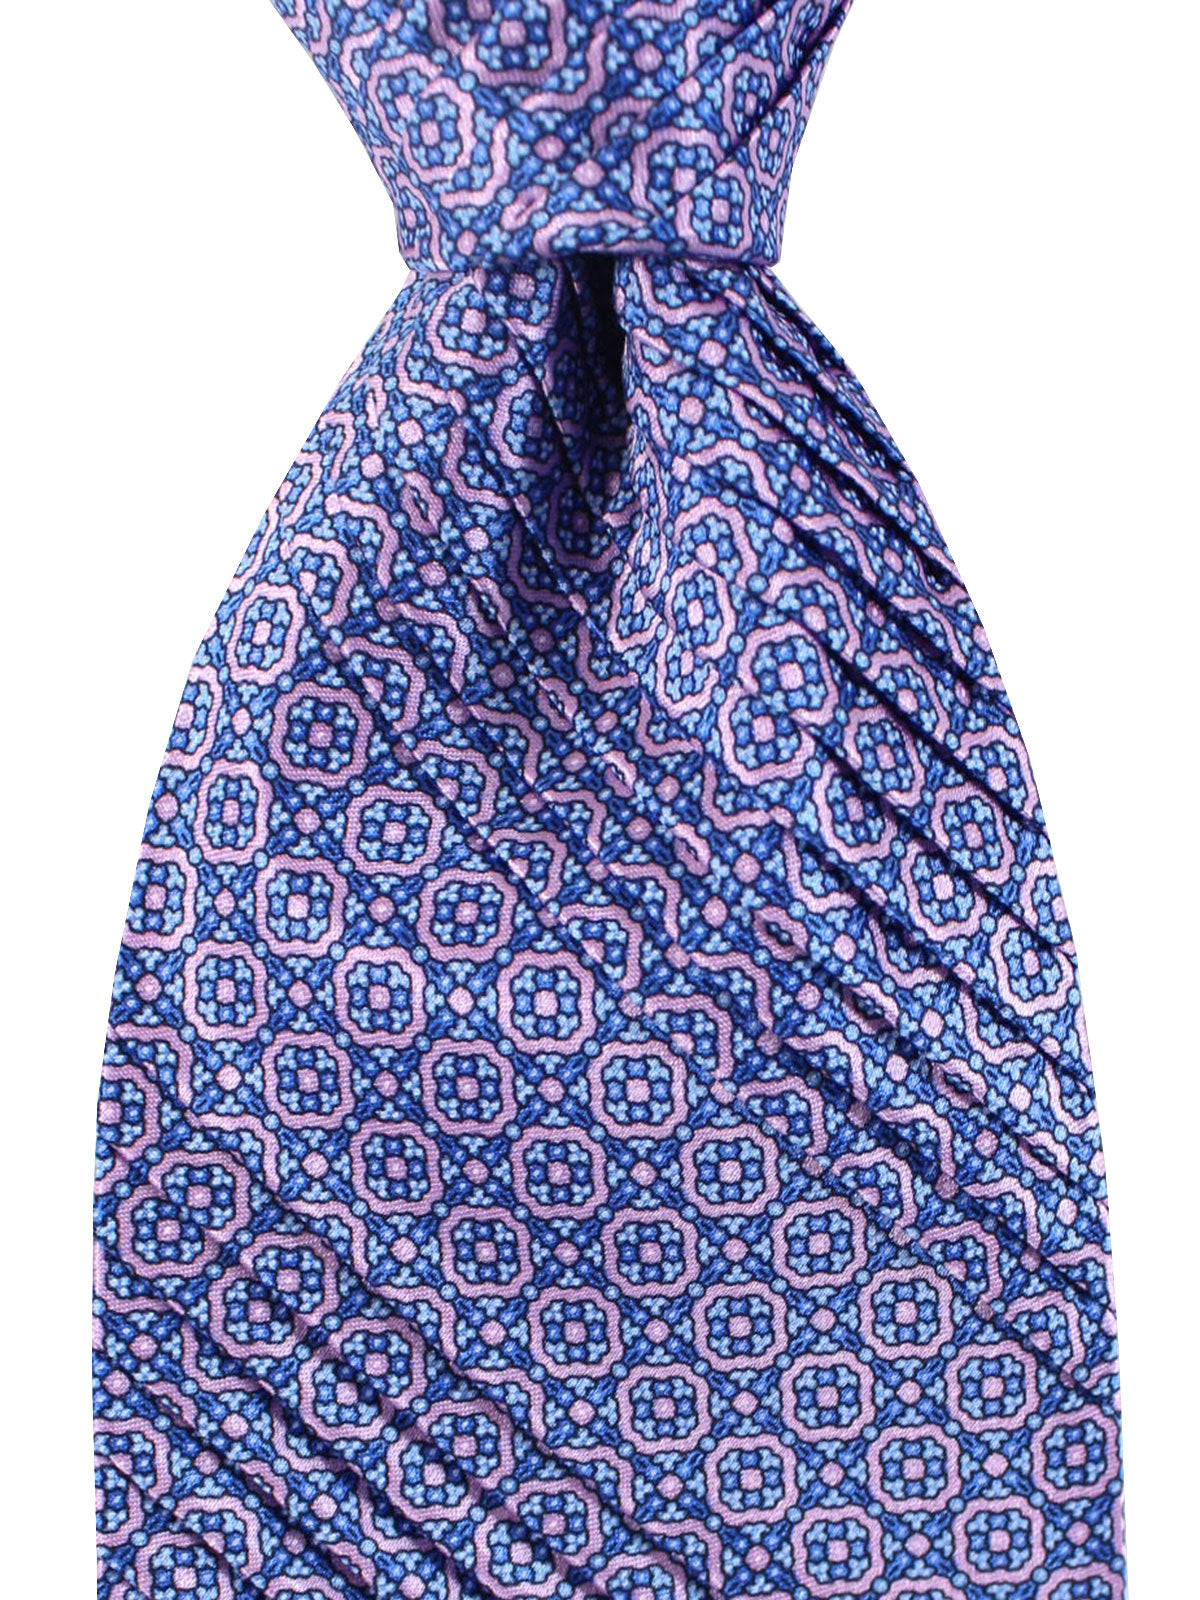 Stefano Ricci Pleated Silk Tie Blue Lilac Geometric